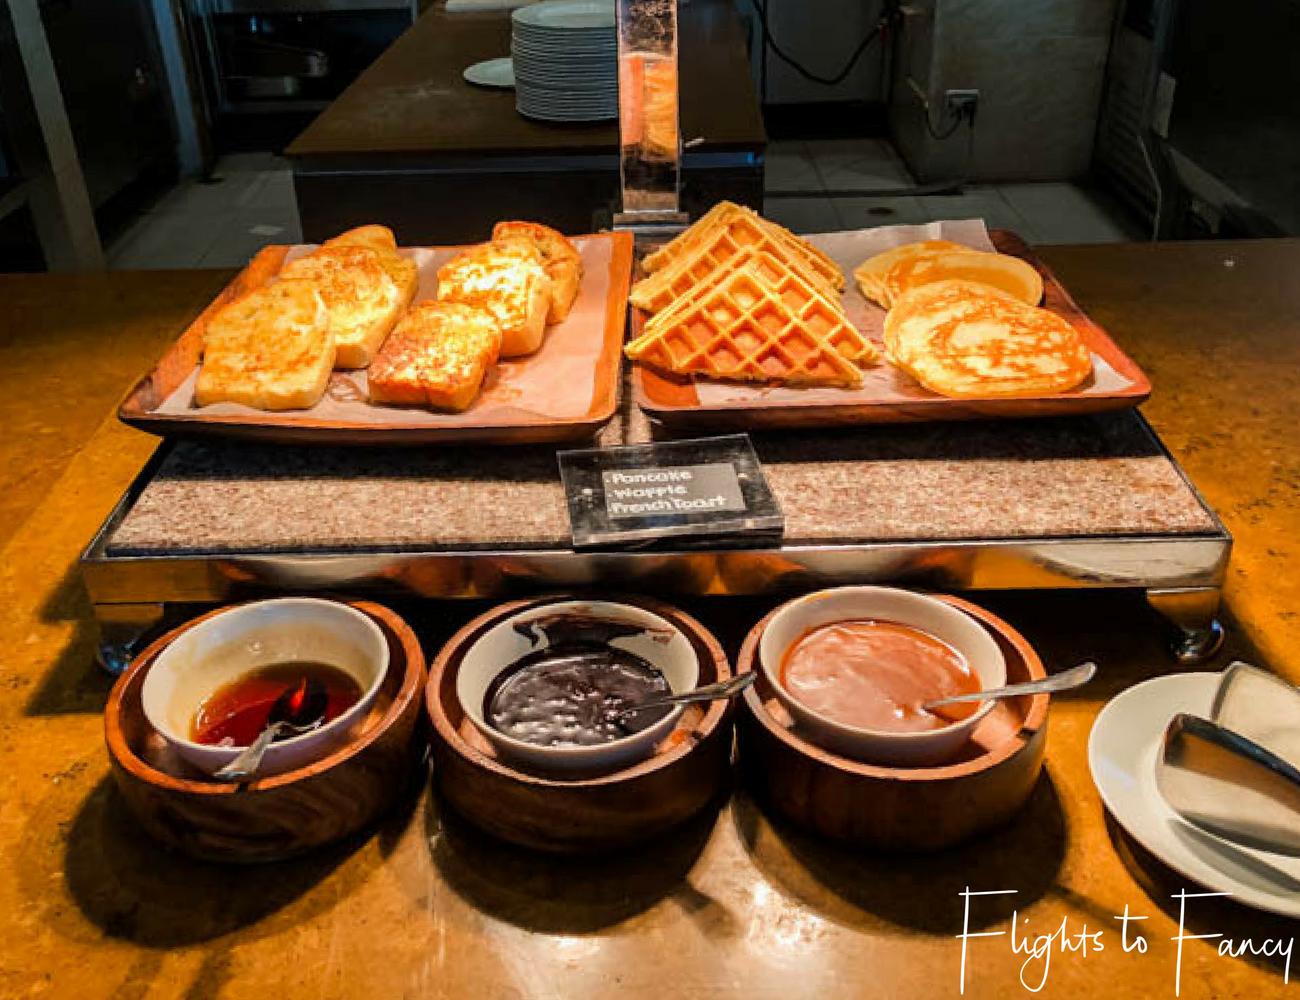 Flights To Fancy @ Raffles Makati Manila - Breakfast Spread